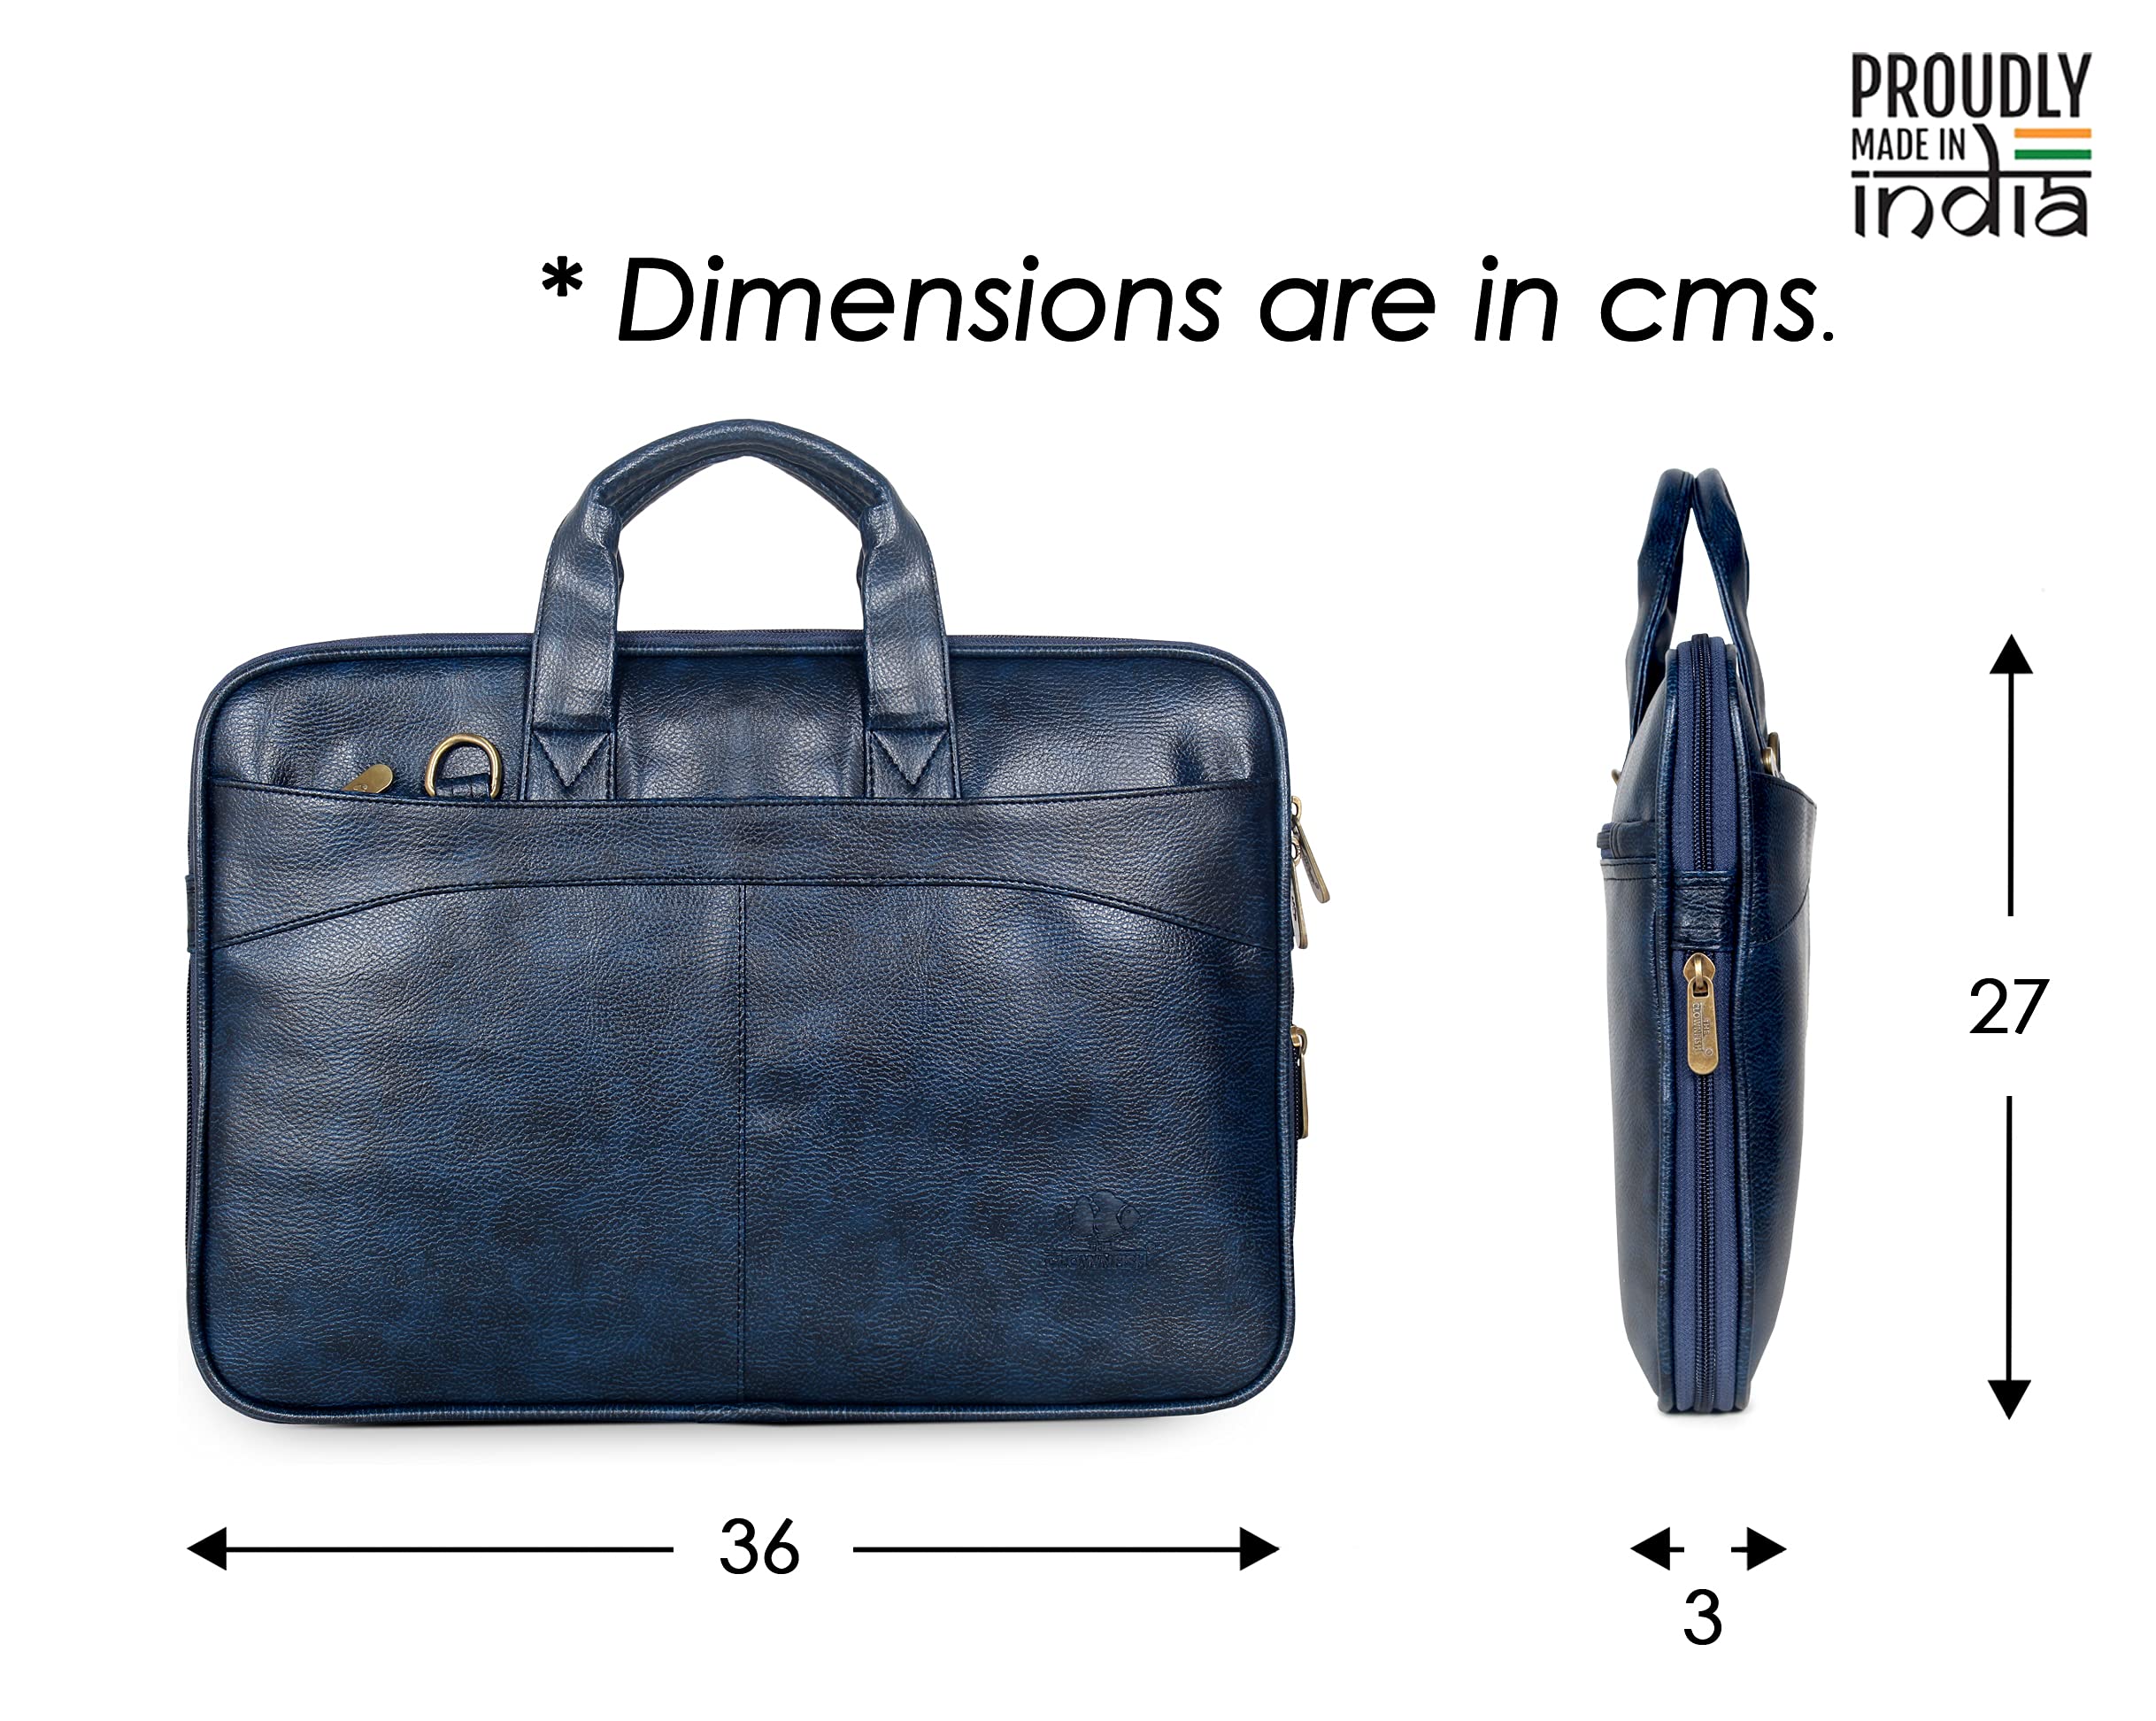 The Clownfish Glamour Faux Leather Slim Expandable 12 inch Laptop Messenger Bag Briefcase (Blue)